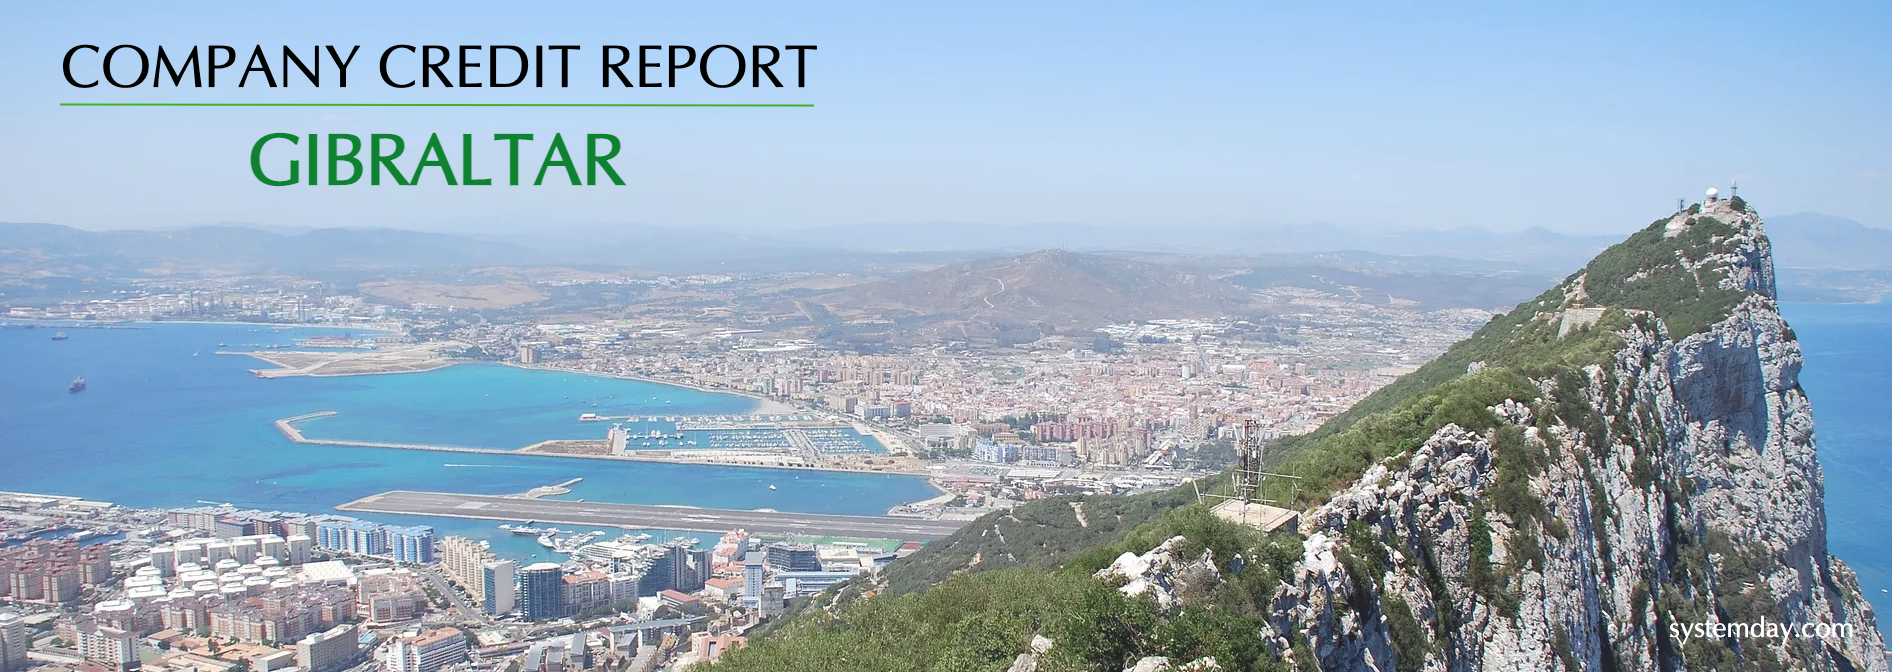 Gibraltar Company Credit Report